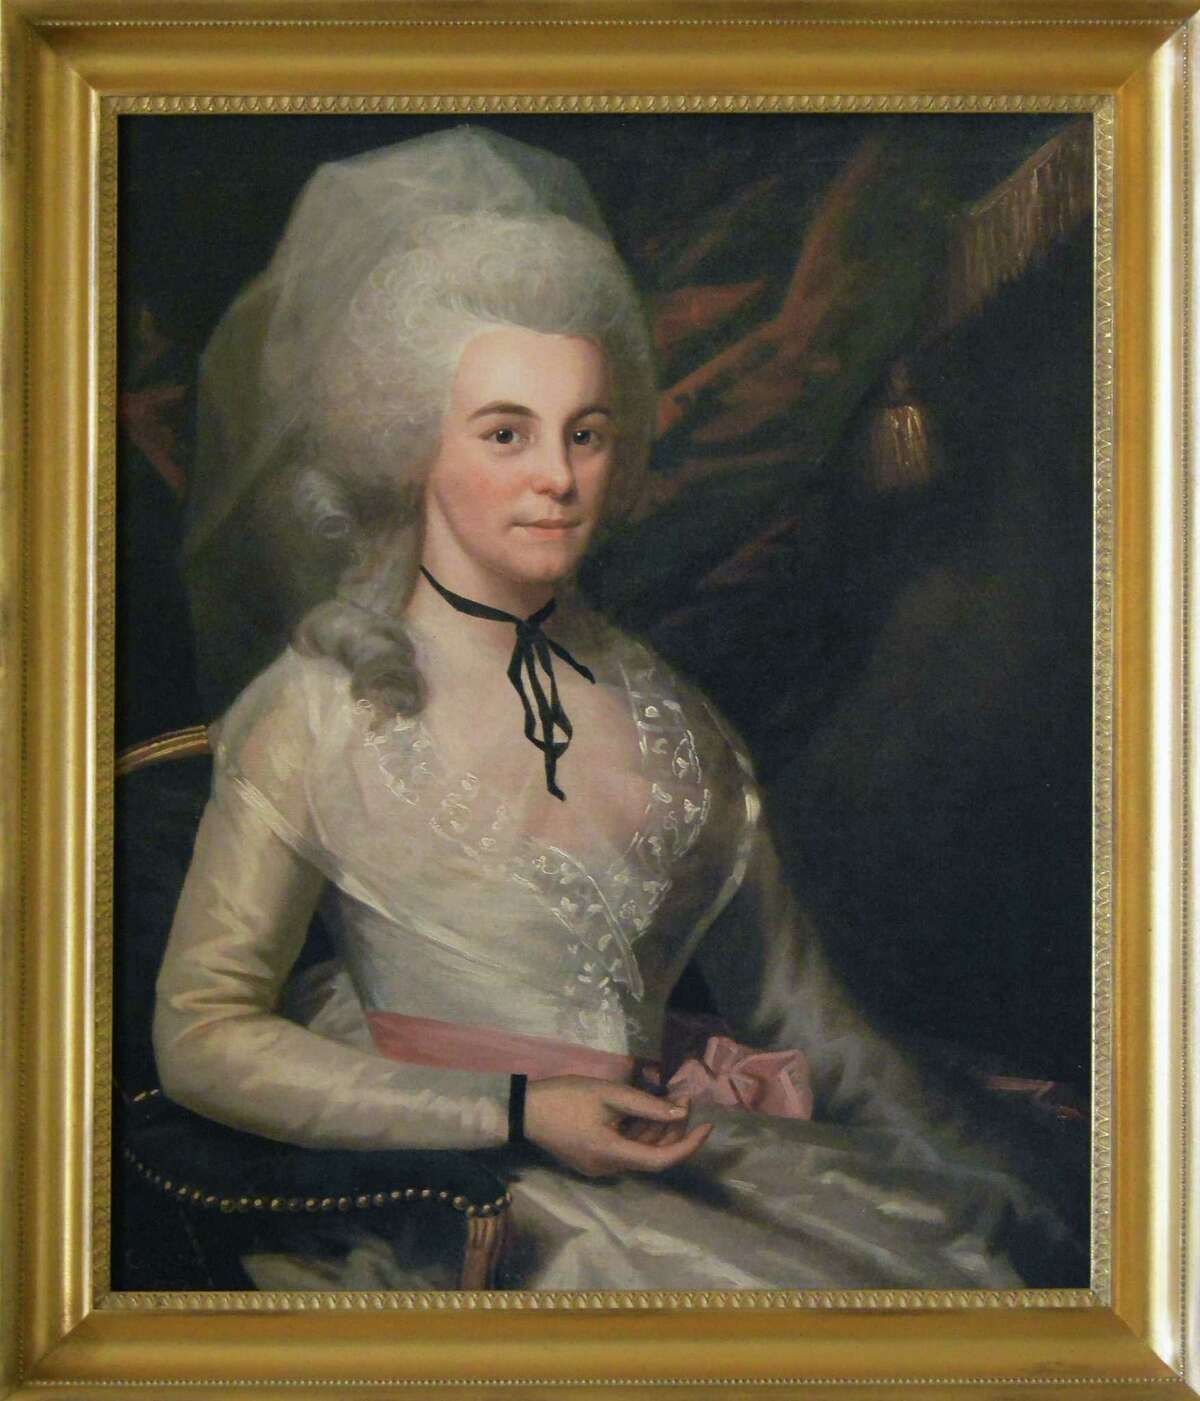 Elizabeth by Jessica Hamilton